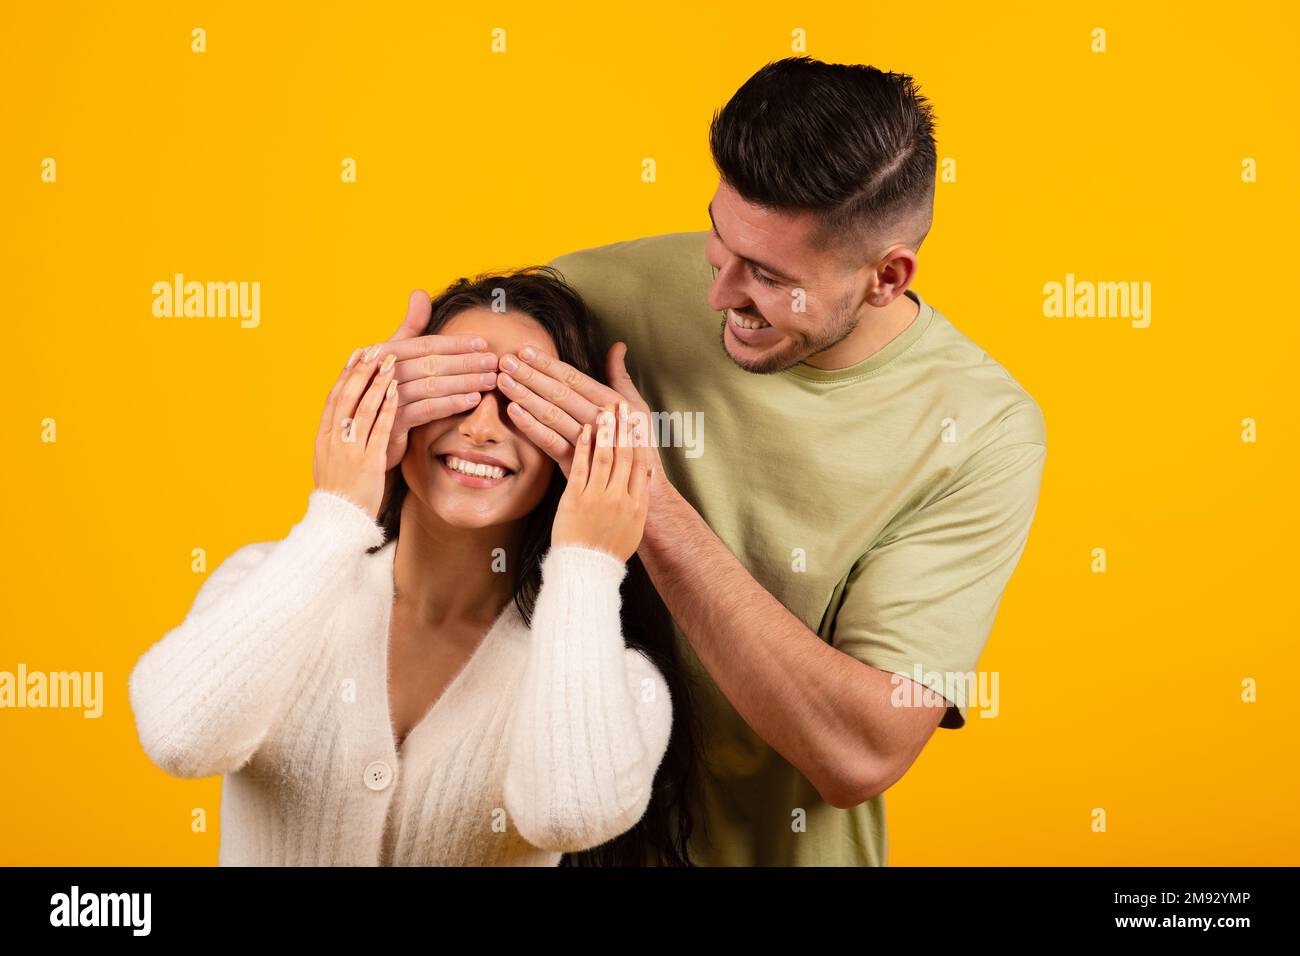 Smiling millennial arabic guy closes eyes of surprised lady, birthday greeting, isolated on orange background Stock Photo